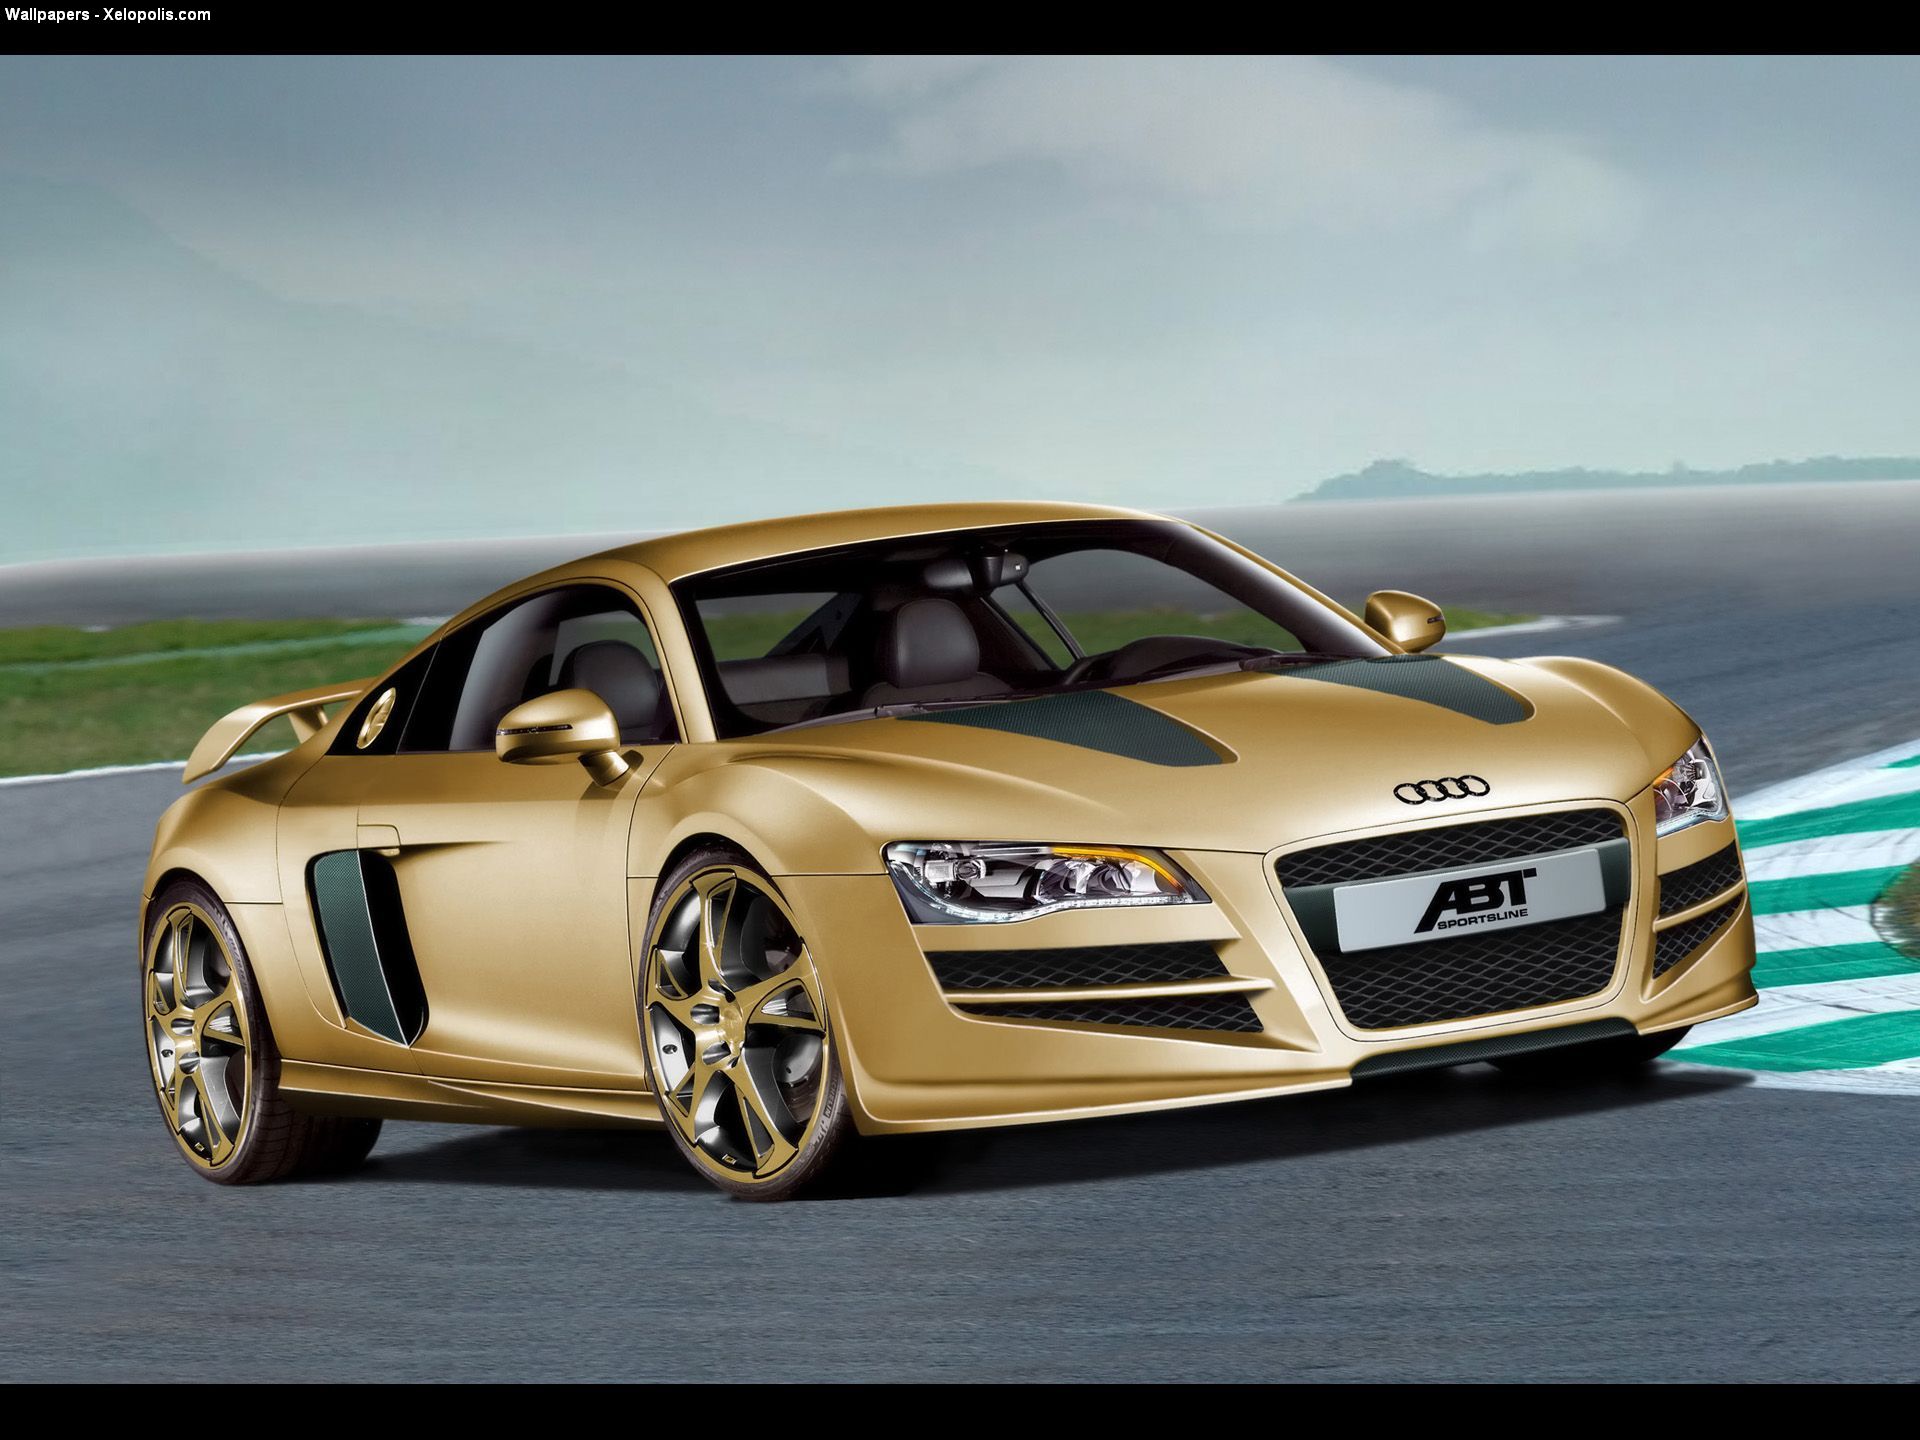 Awesome Audi R8 Gold Desktop Image Wallpapers #8242 Wallpaper ...